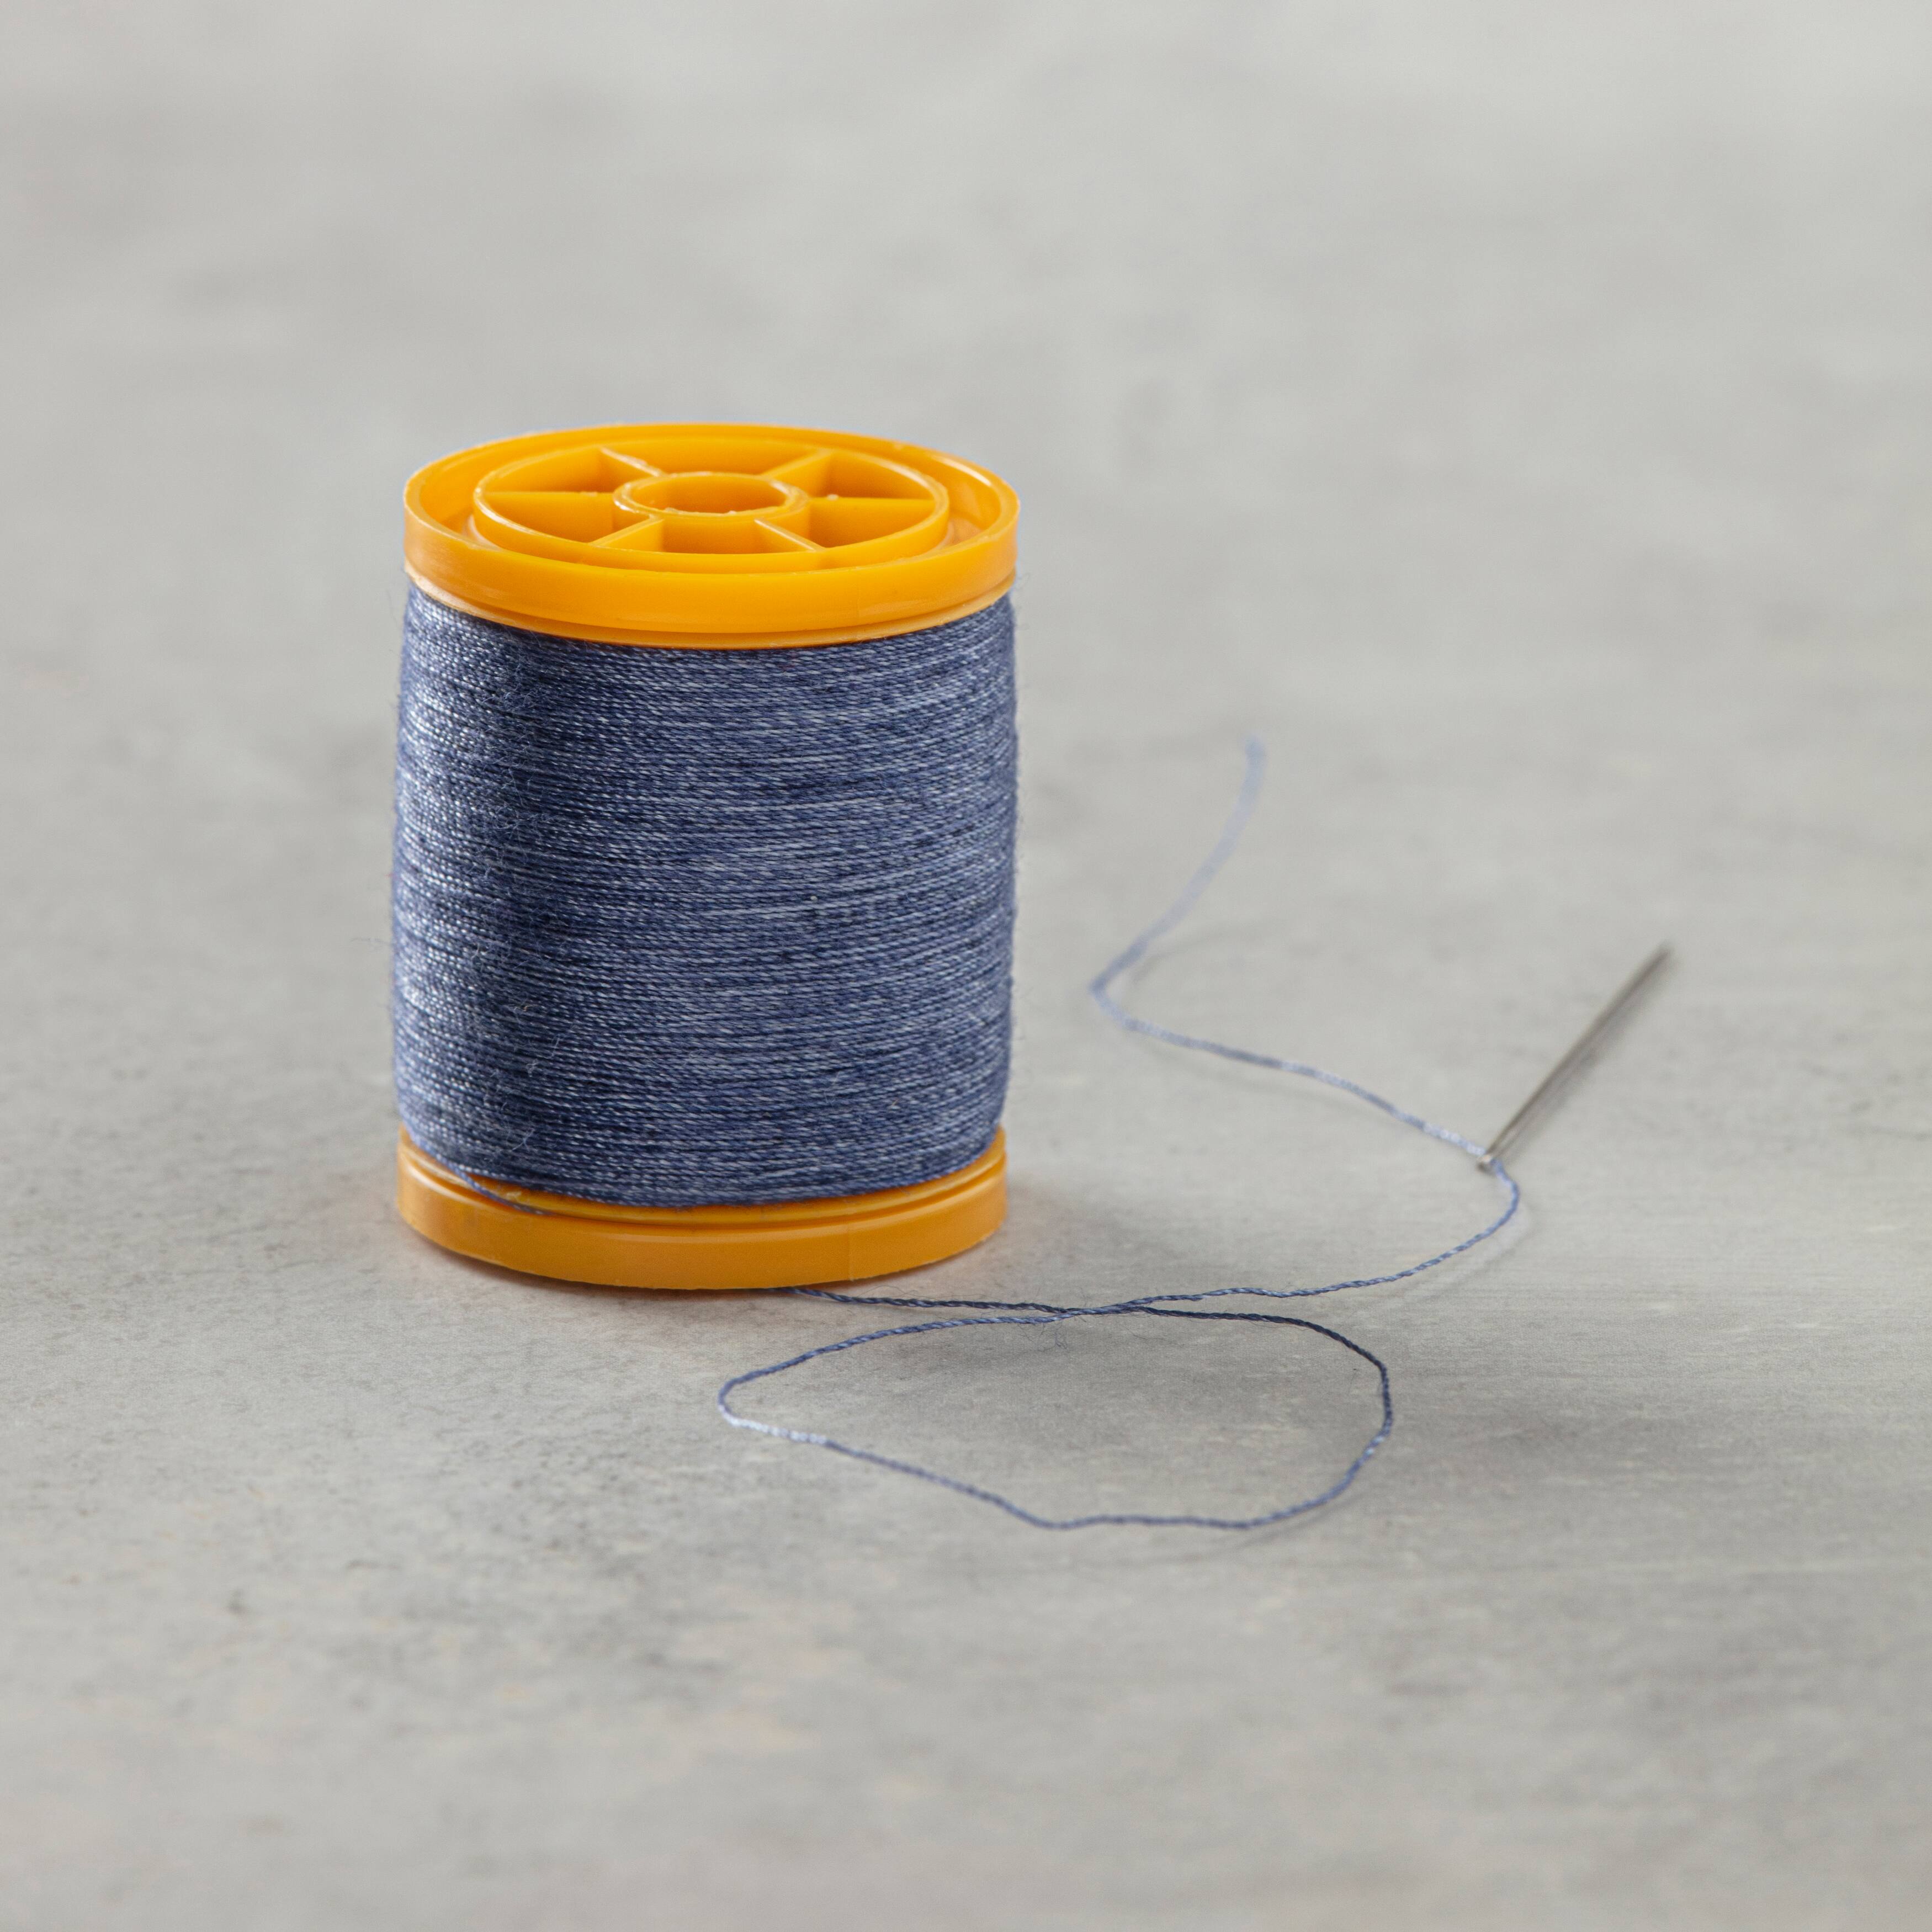 Coats & Clark Inc. N576 Denim Thread for Jeans, 250-Yard, Blue